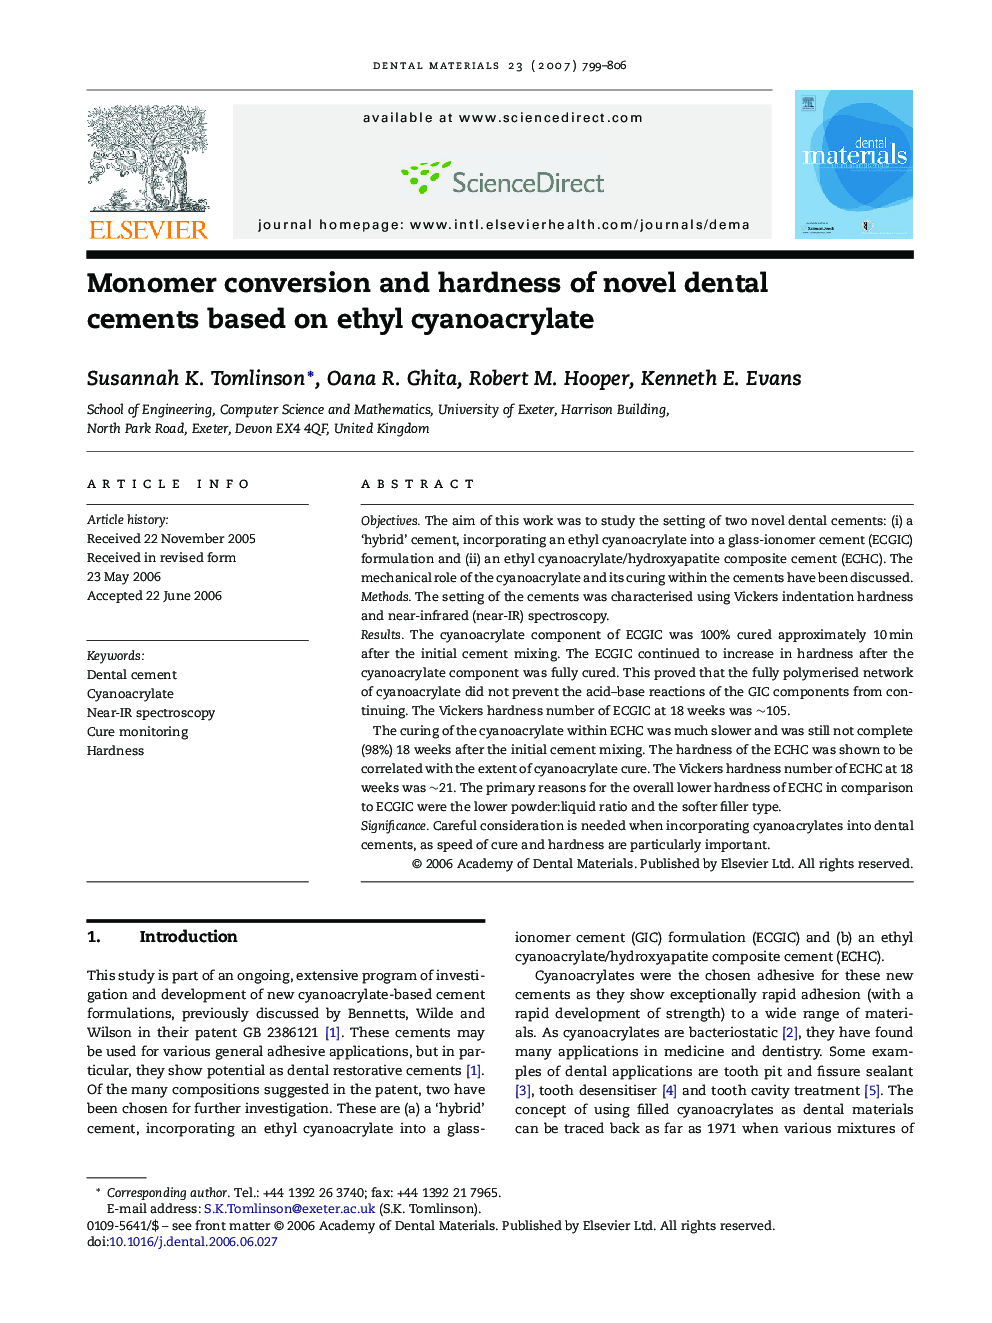 Monomer conversion and hardness of novel dental cements based on ethyl cyanoacrylate